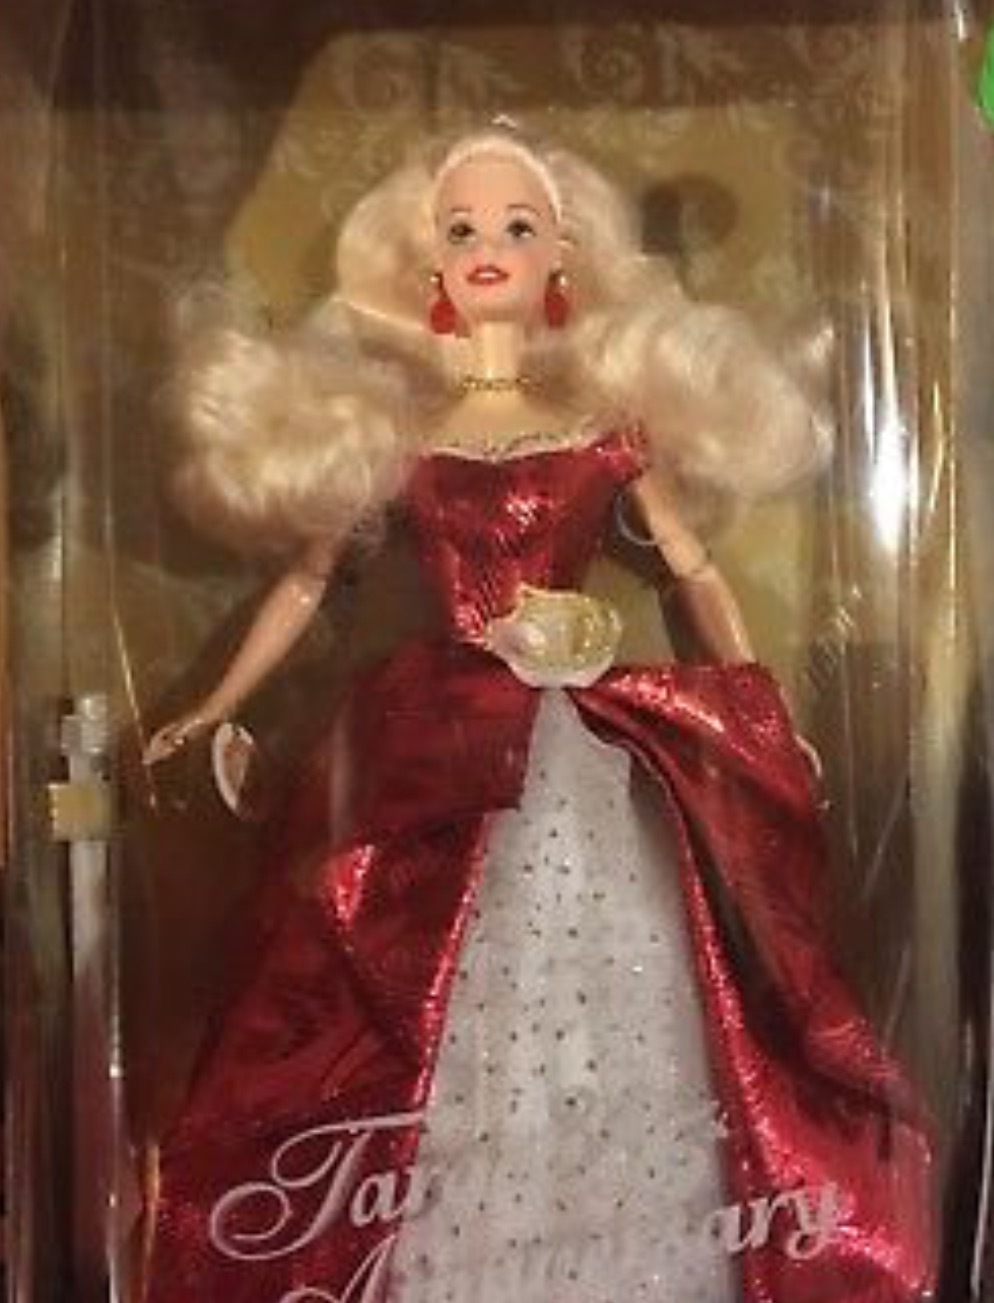 target 35th anniversary barbie value